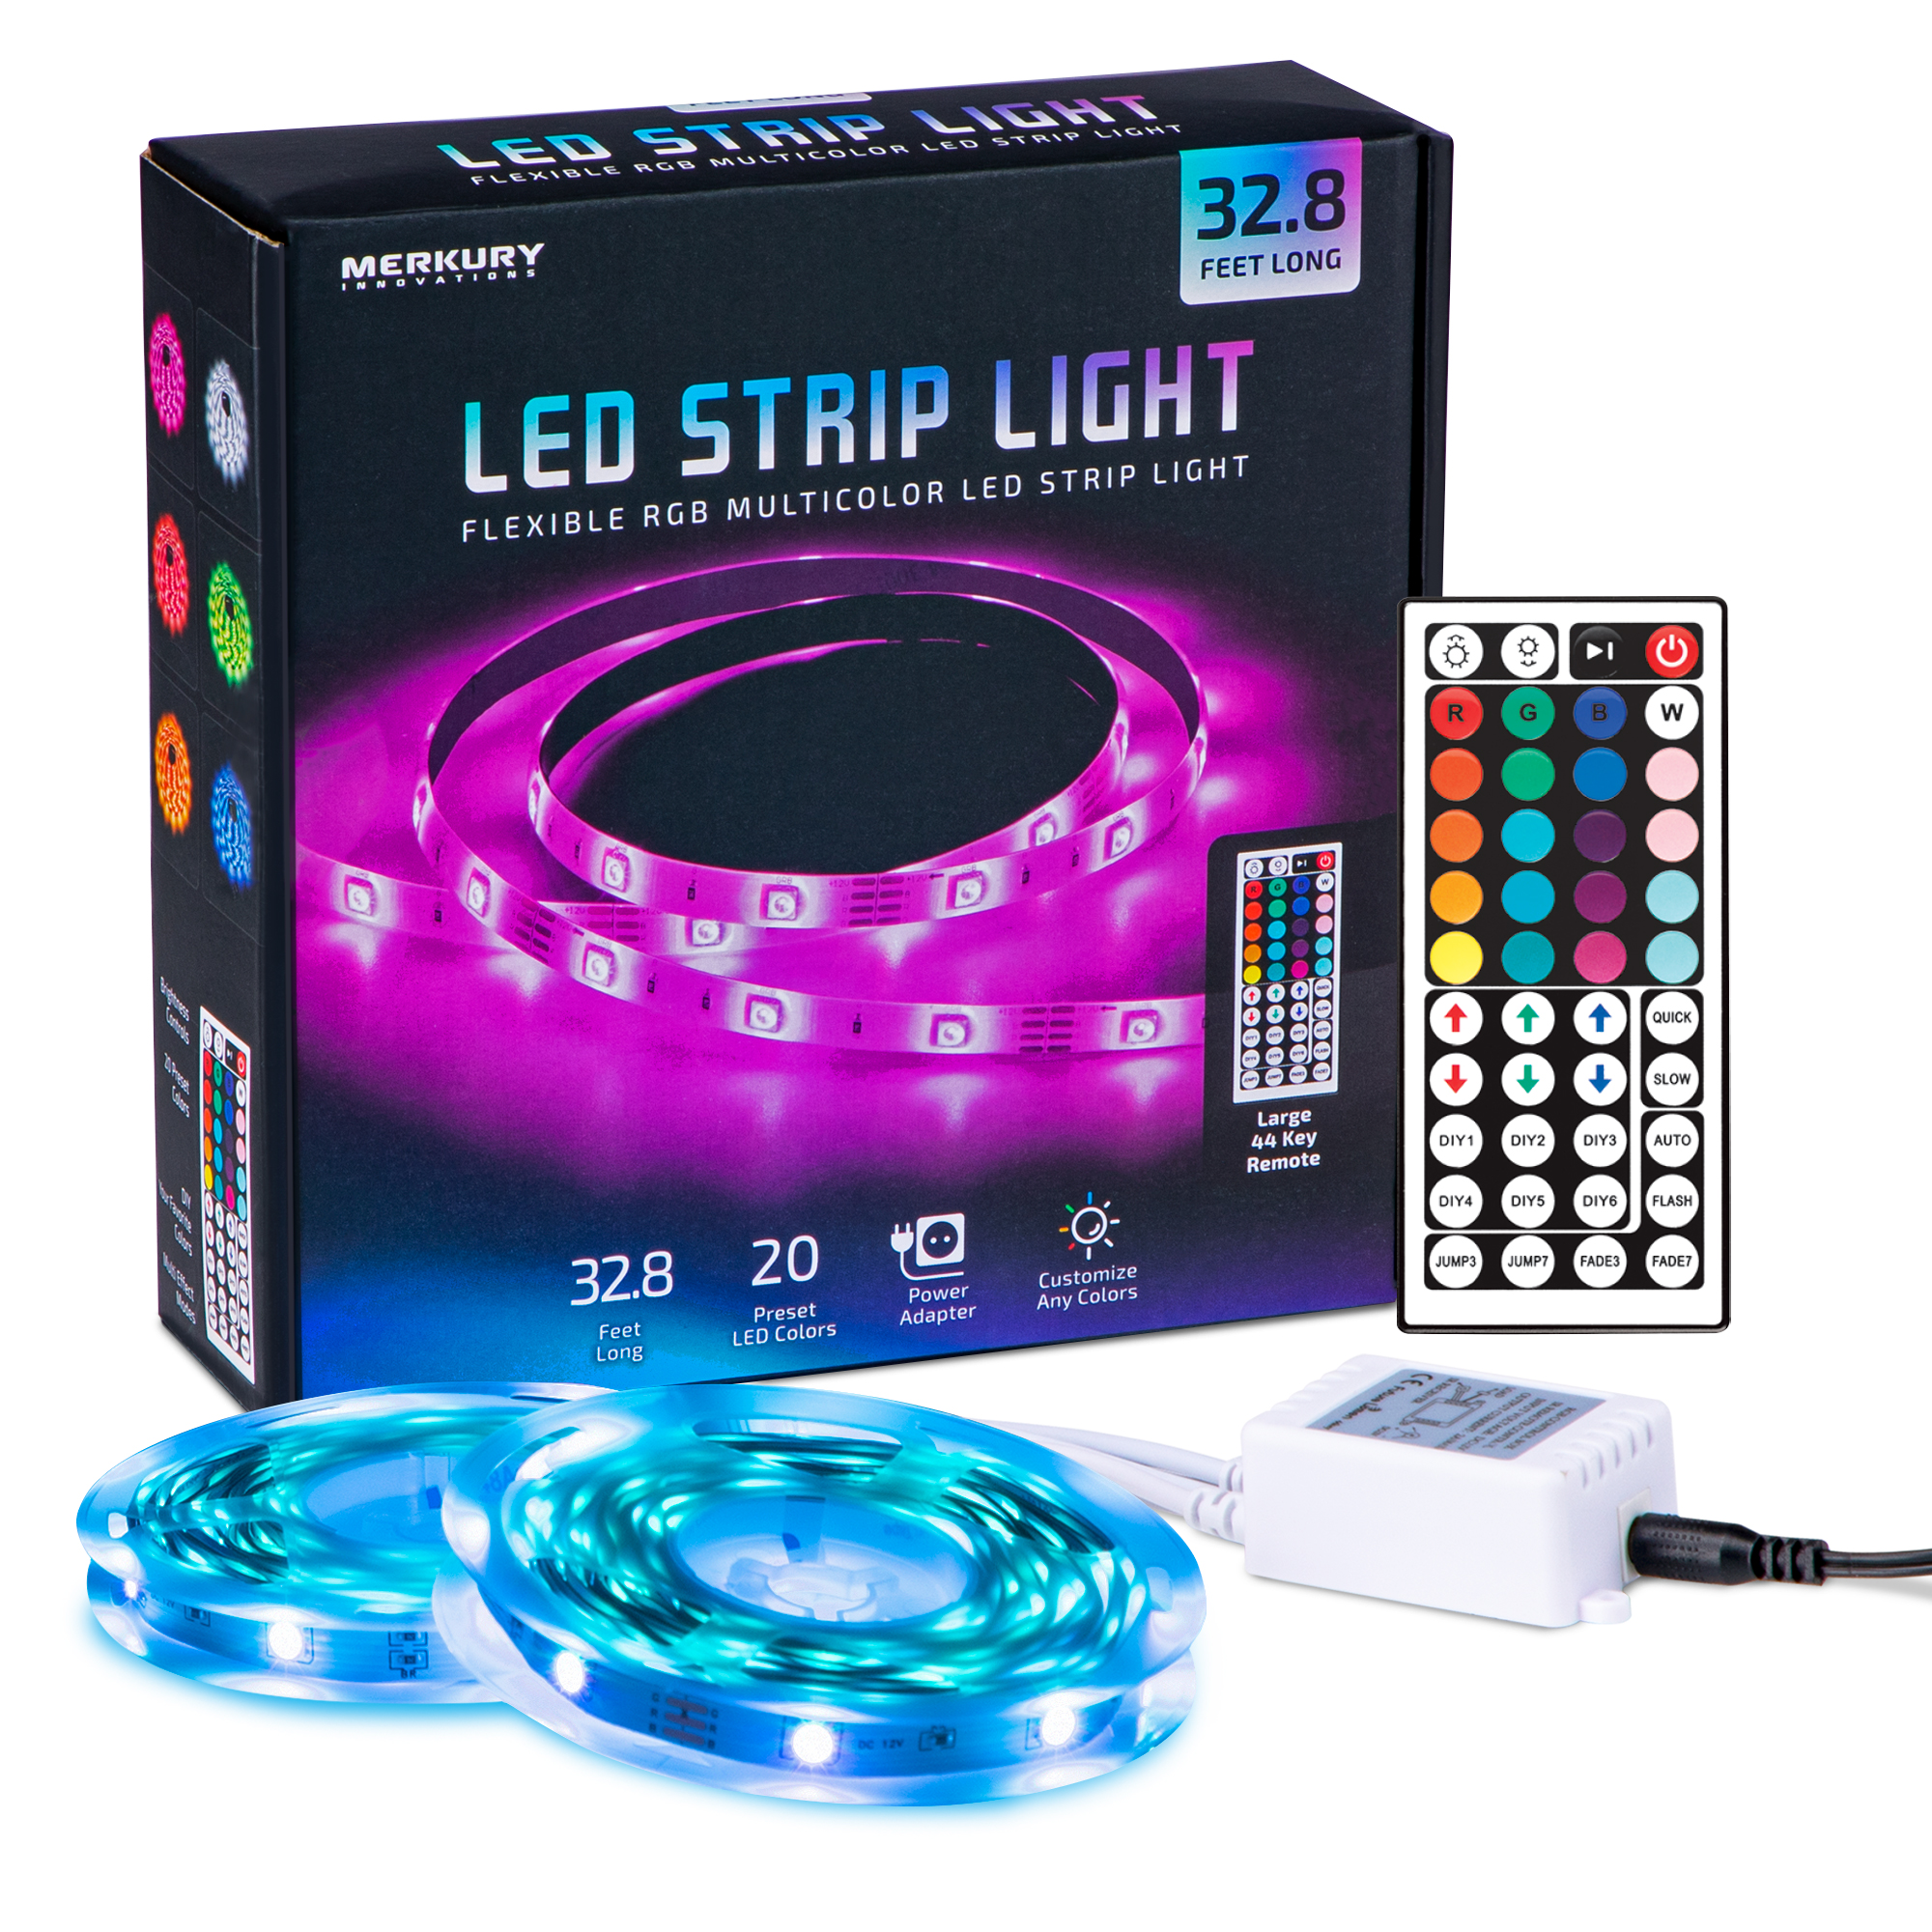 Merkury Innovations 32.8ft RGB Strip Light with 44 Key Remote - Walmart $3 YMMV In-Store